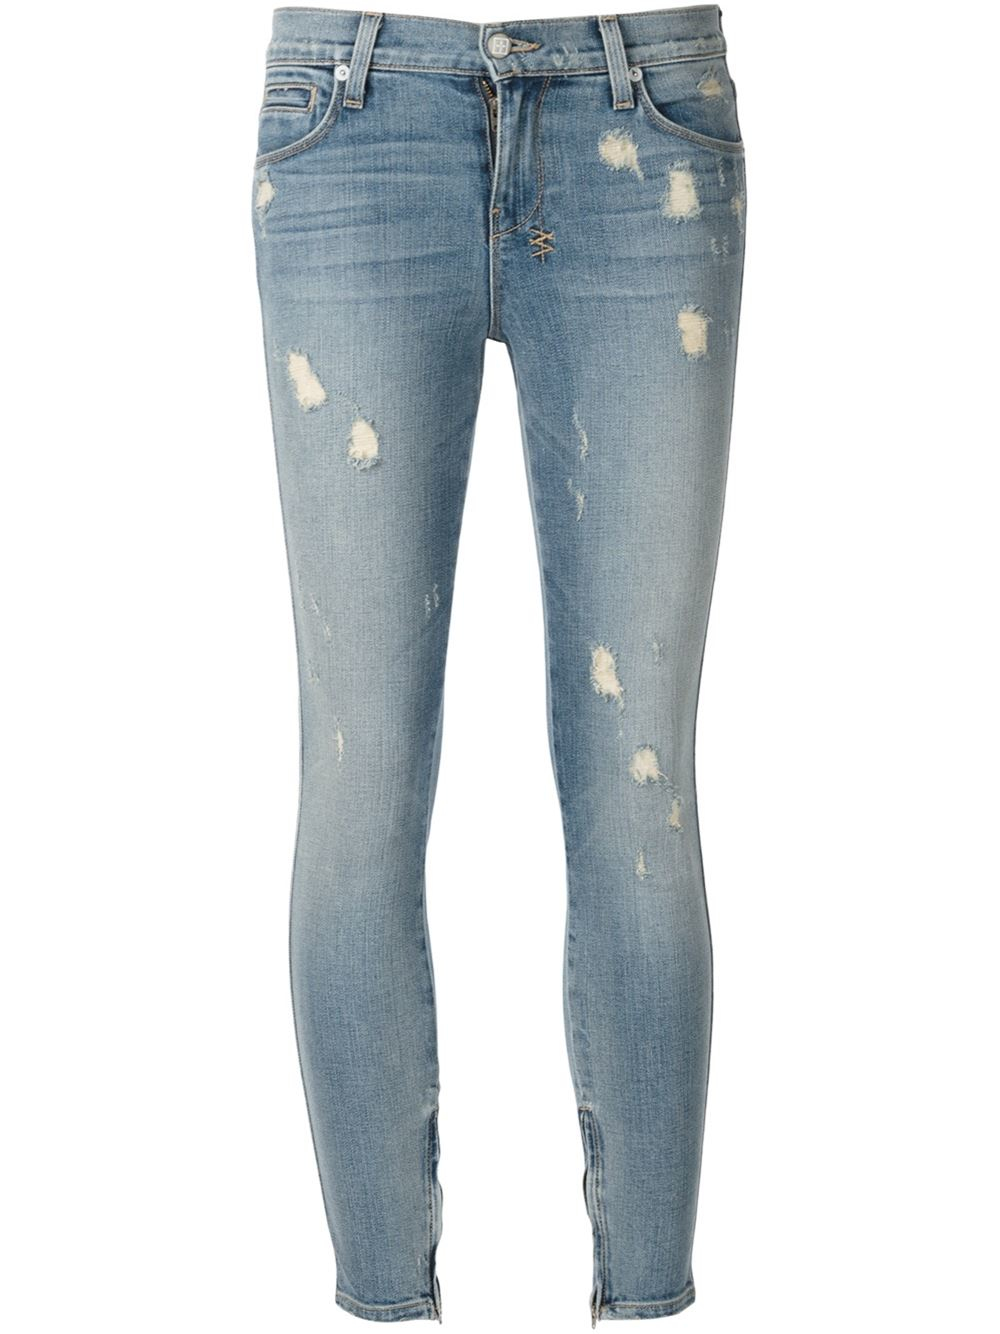 Lyst - Ksubi Cropped Skinny Jeans in Blue